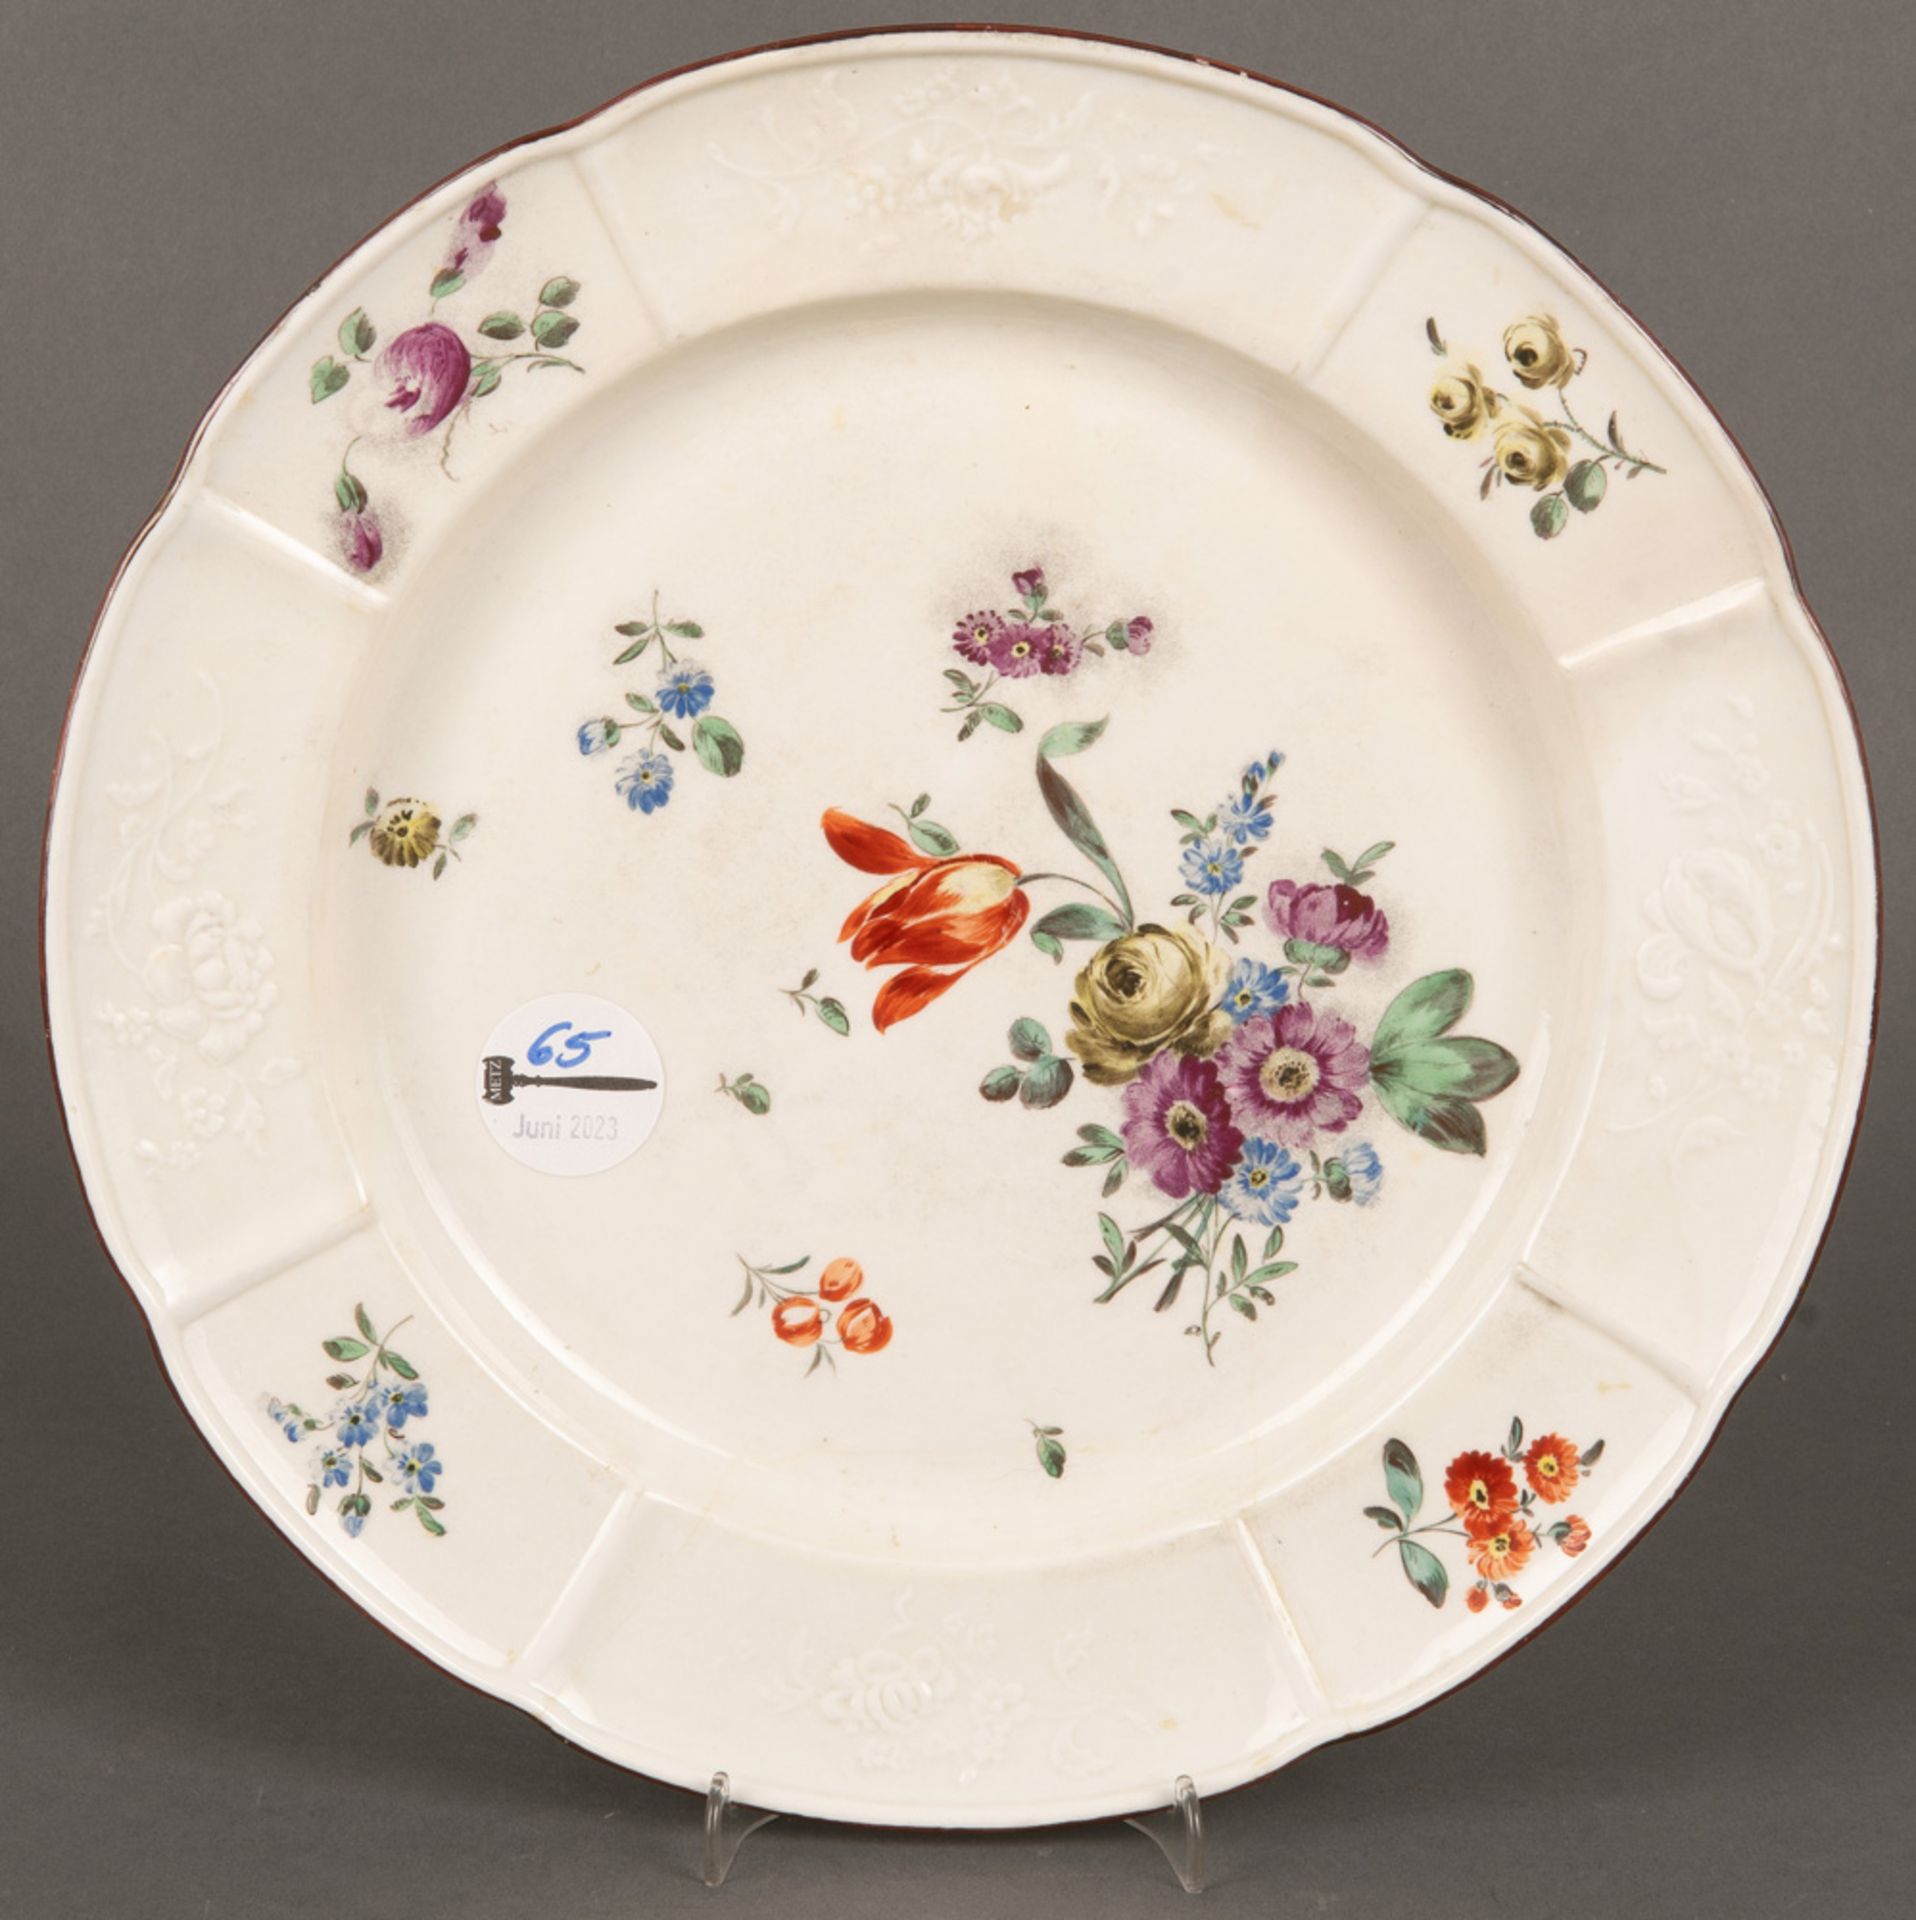 Große runde Platte. Frankenthal 1780. Porzellan, bunt floral bemalt, verso unterglasurblaue bekrönte